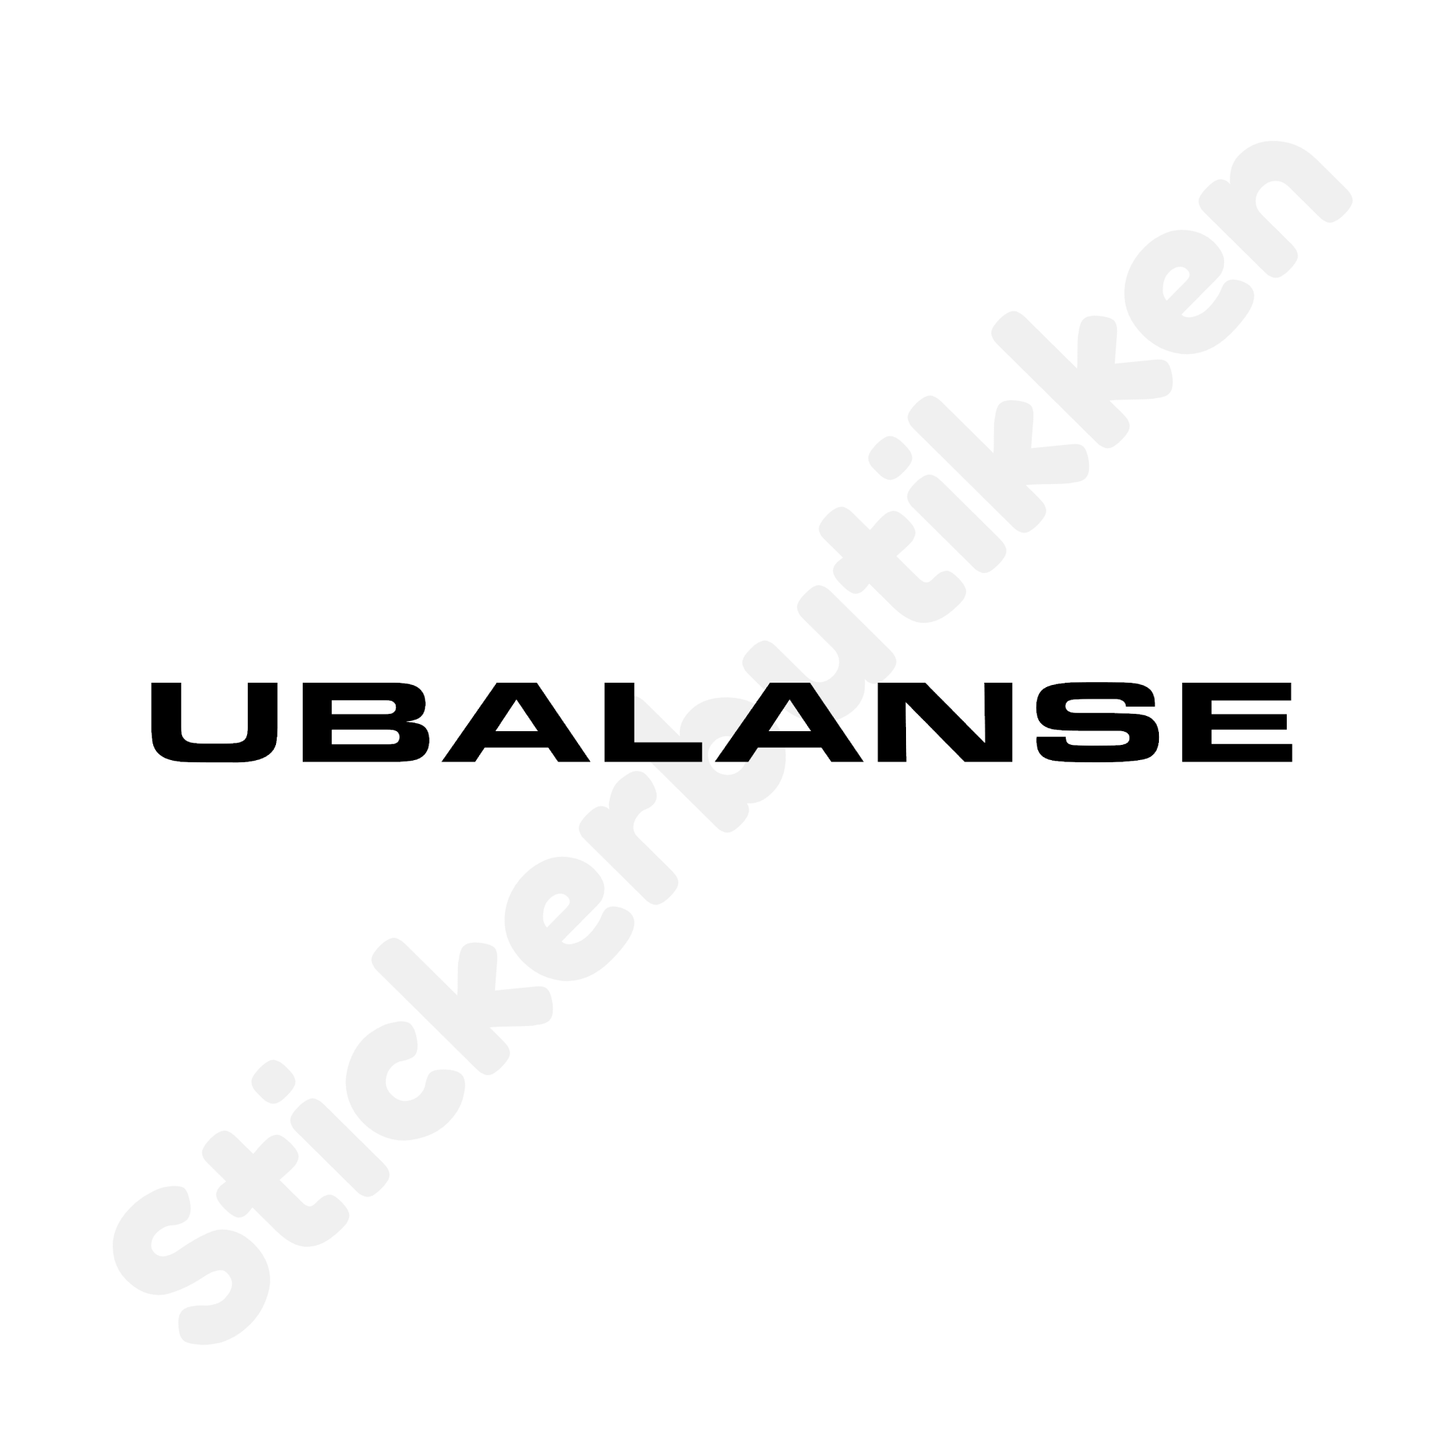 UBALANSE Streamer